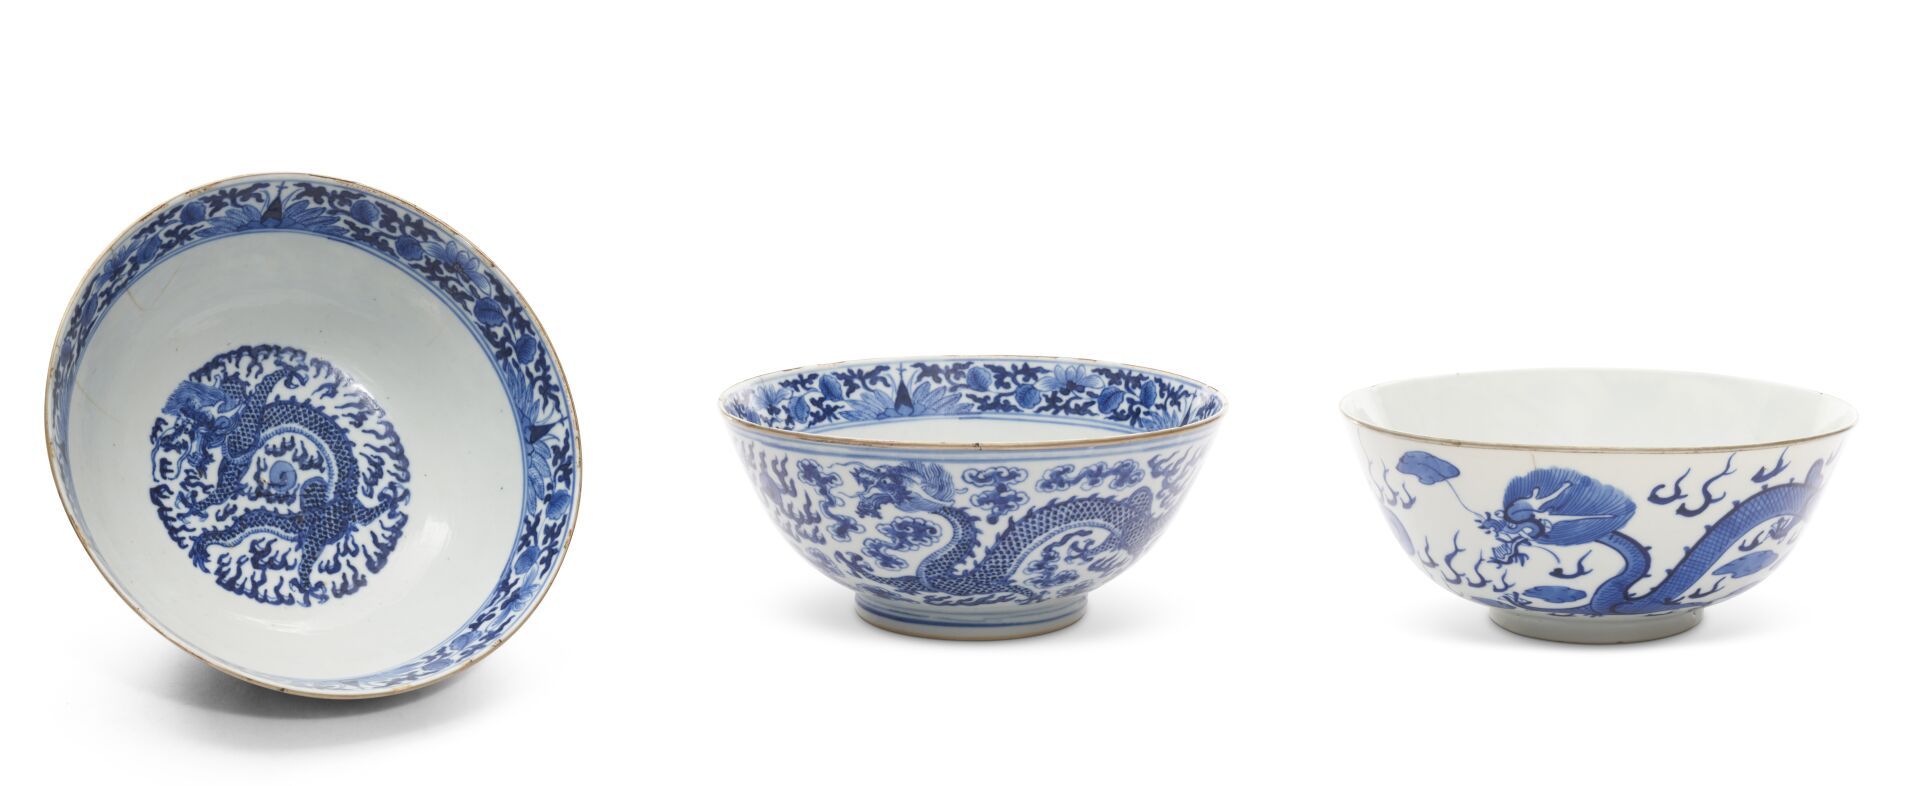 Null 越南用瓷
三只瓷碗，以釉下青色（Hue blue）装饰的云中龙凤。
19和20世纪。
裂缝。